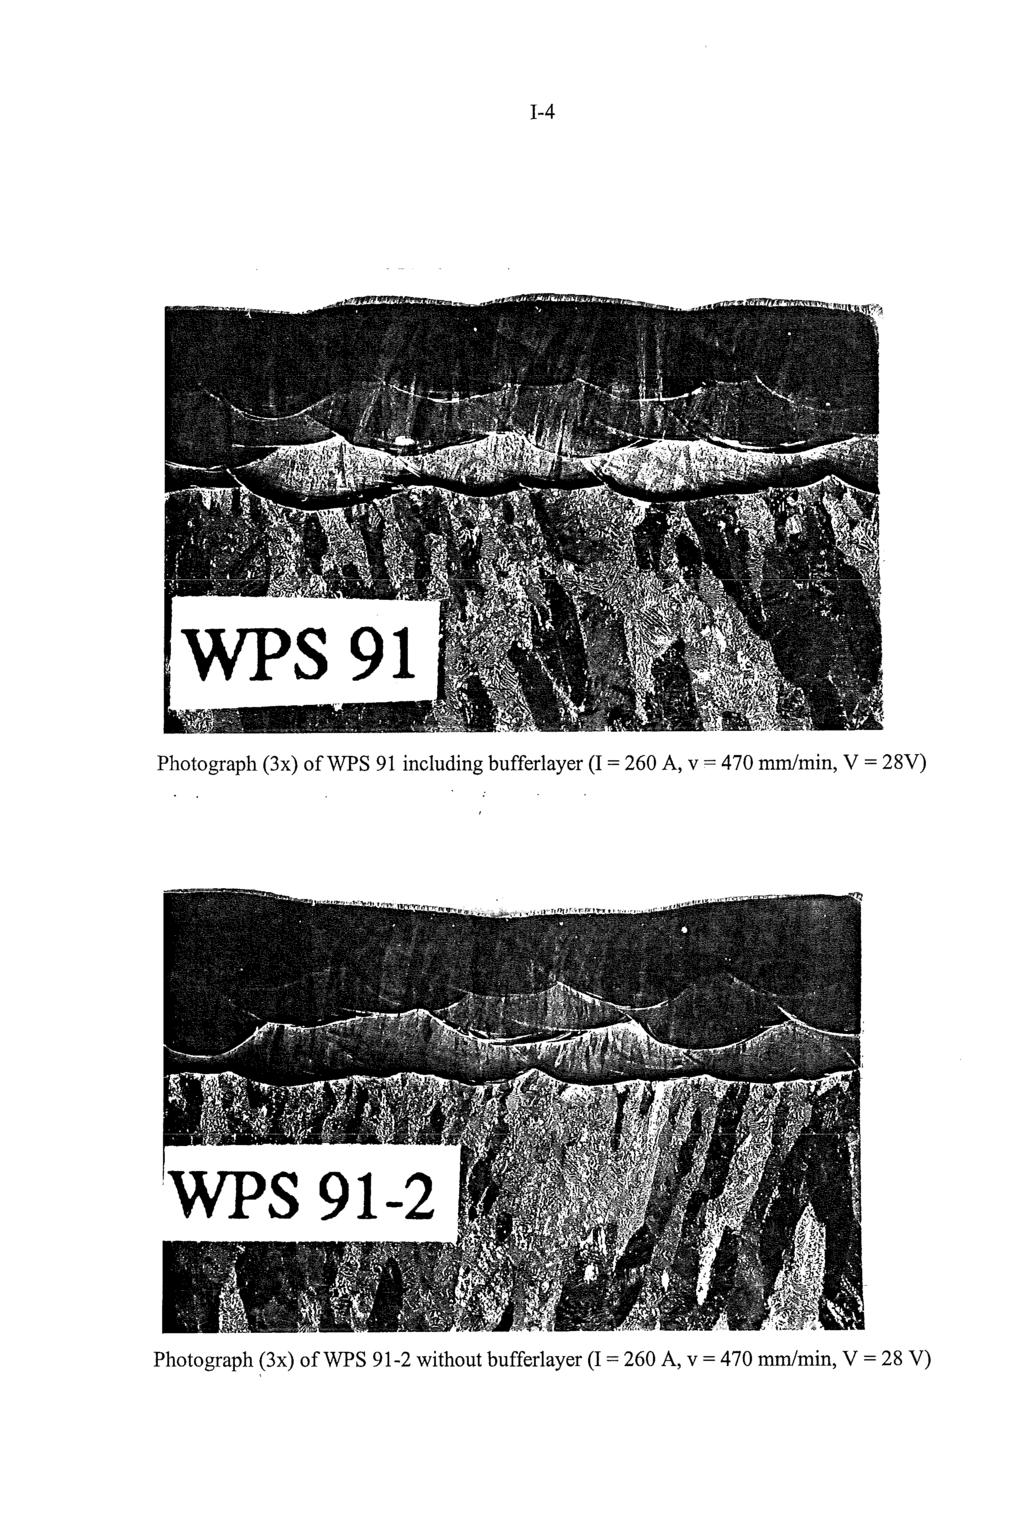 1-4 Photograph (3x) of WPS 91 including bufferlayer (I = 260 A, v = 470 mm/min, V = 28